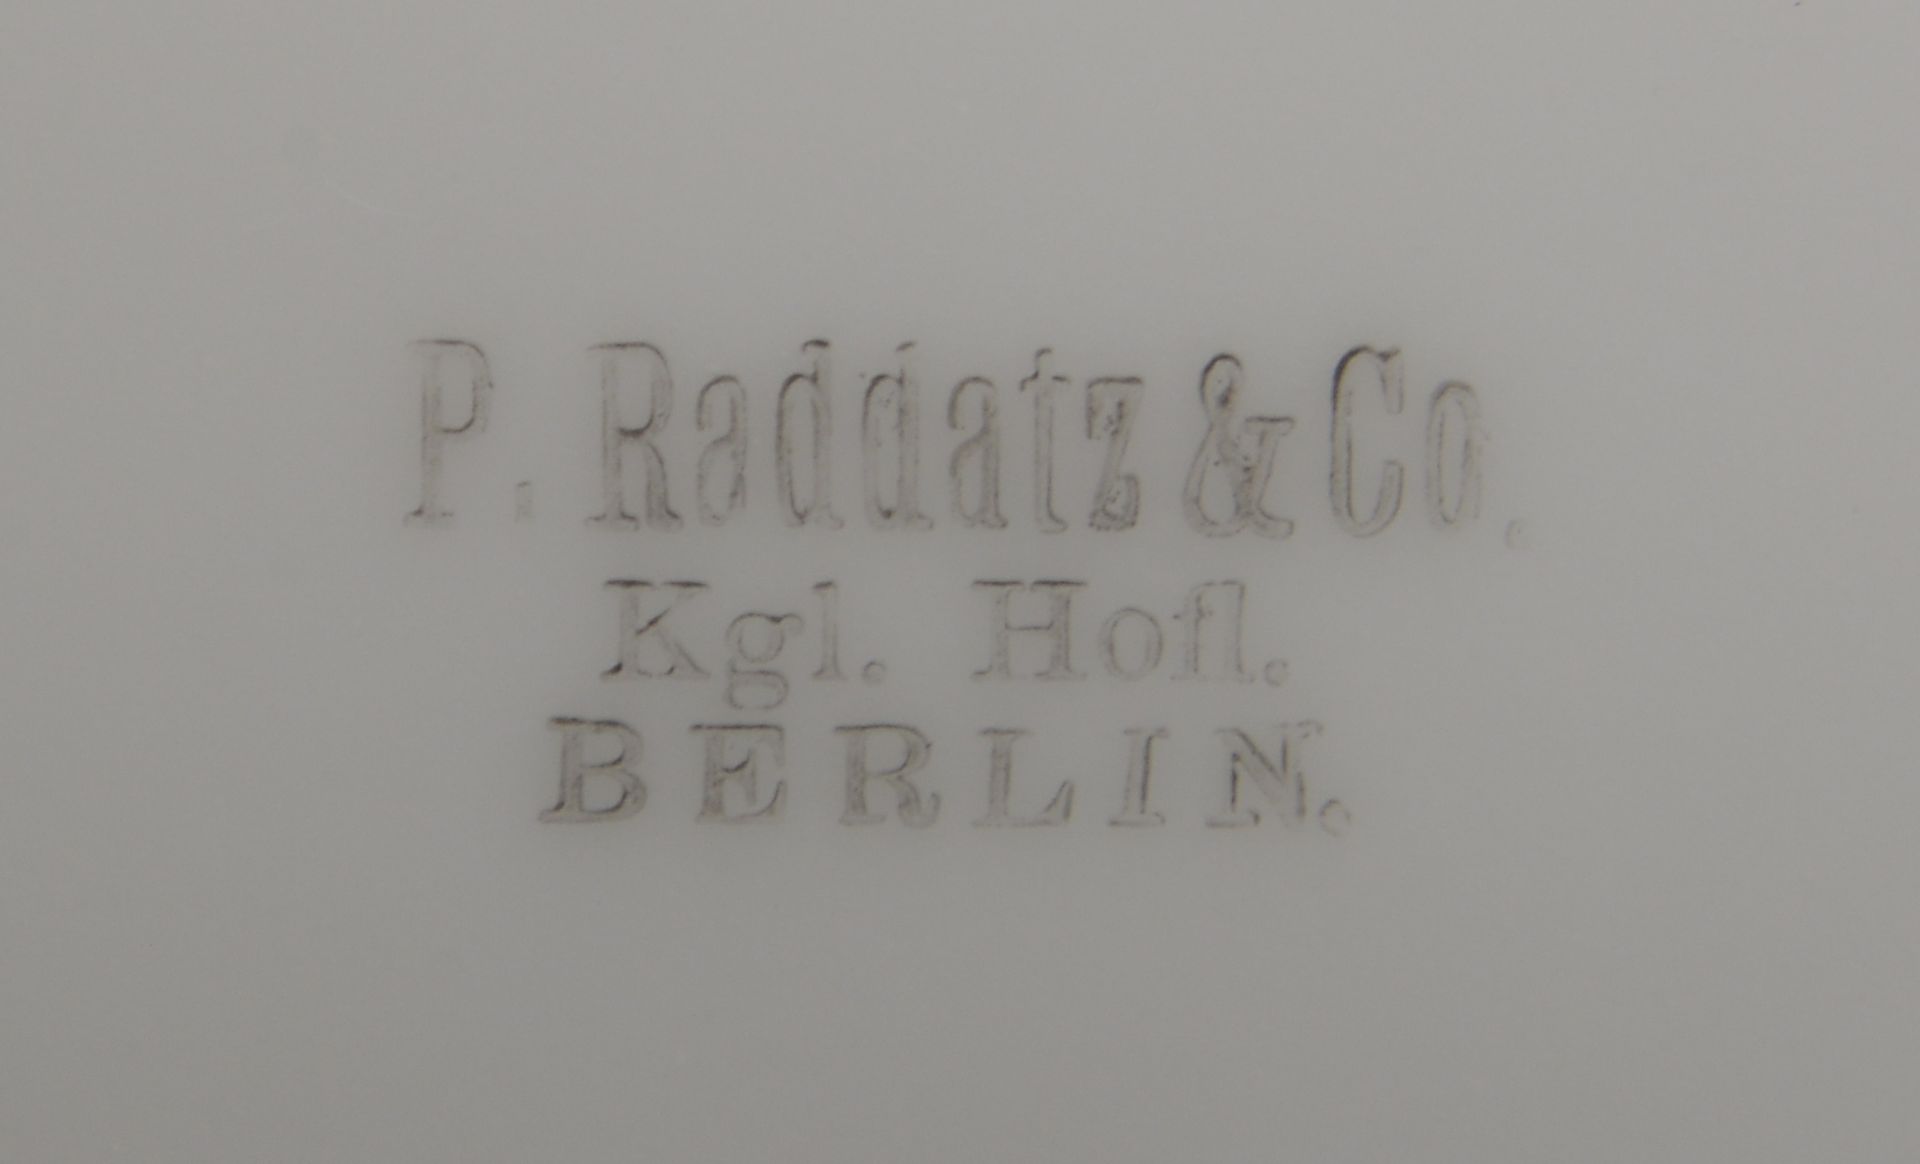 Rosenthal, Tischporzellan-Konvolut, -Louis XIV-, gestempelt -P. Raddatz + Co.-, mit gruener Untergla - Image 3 of 3